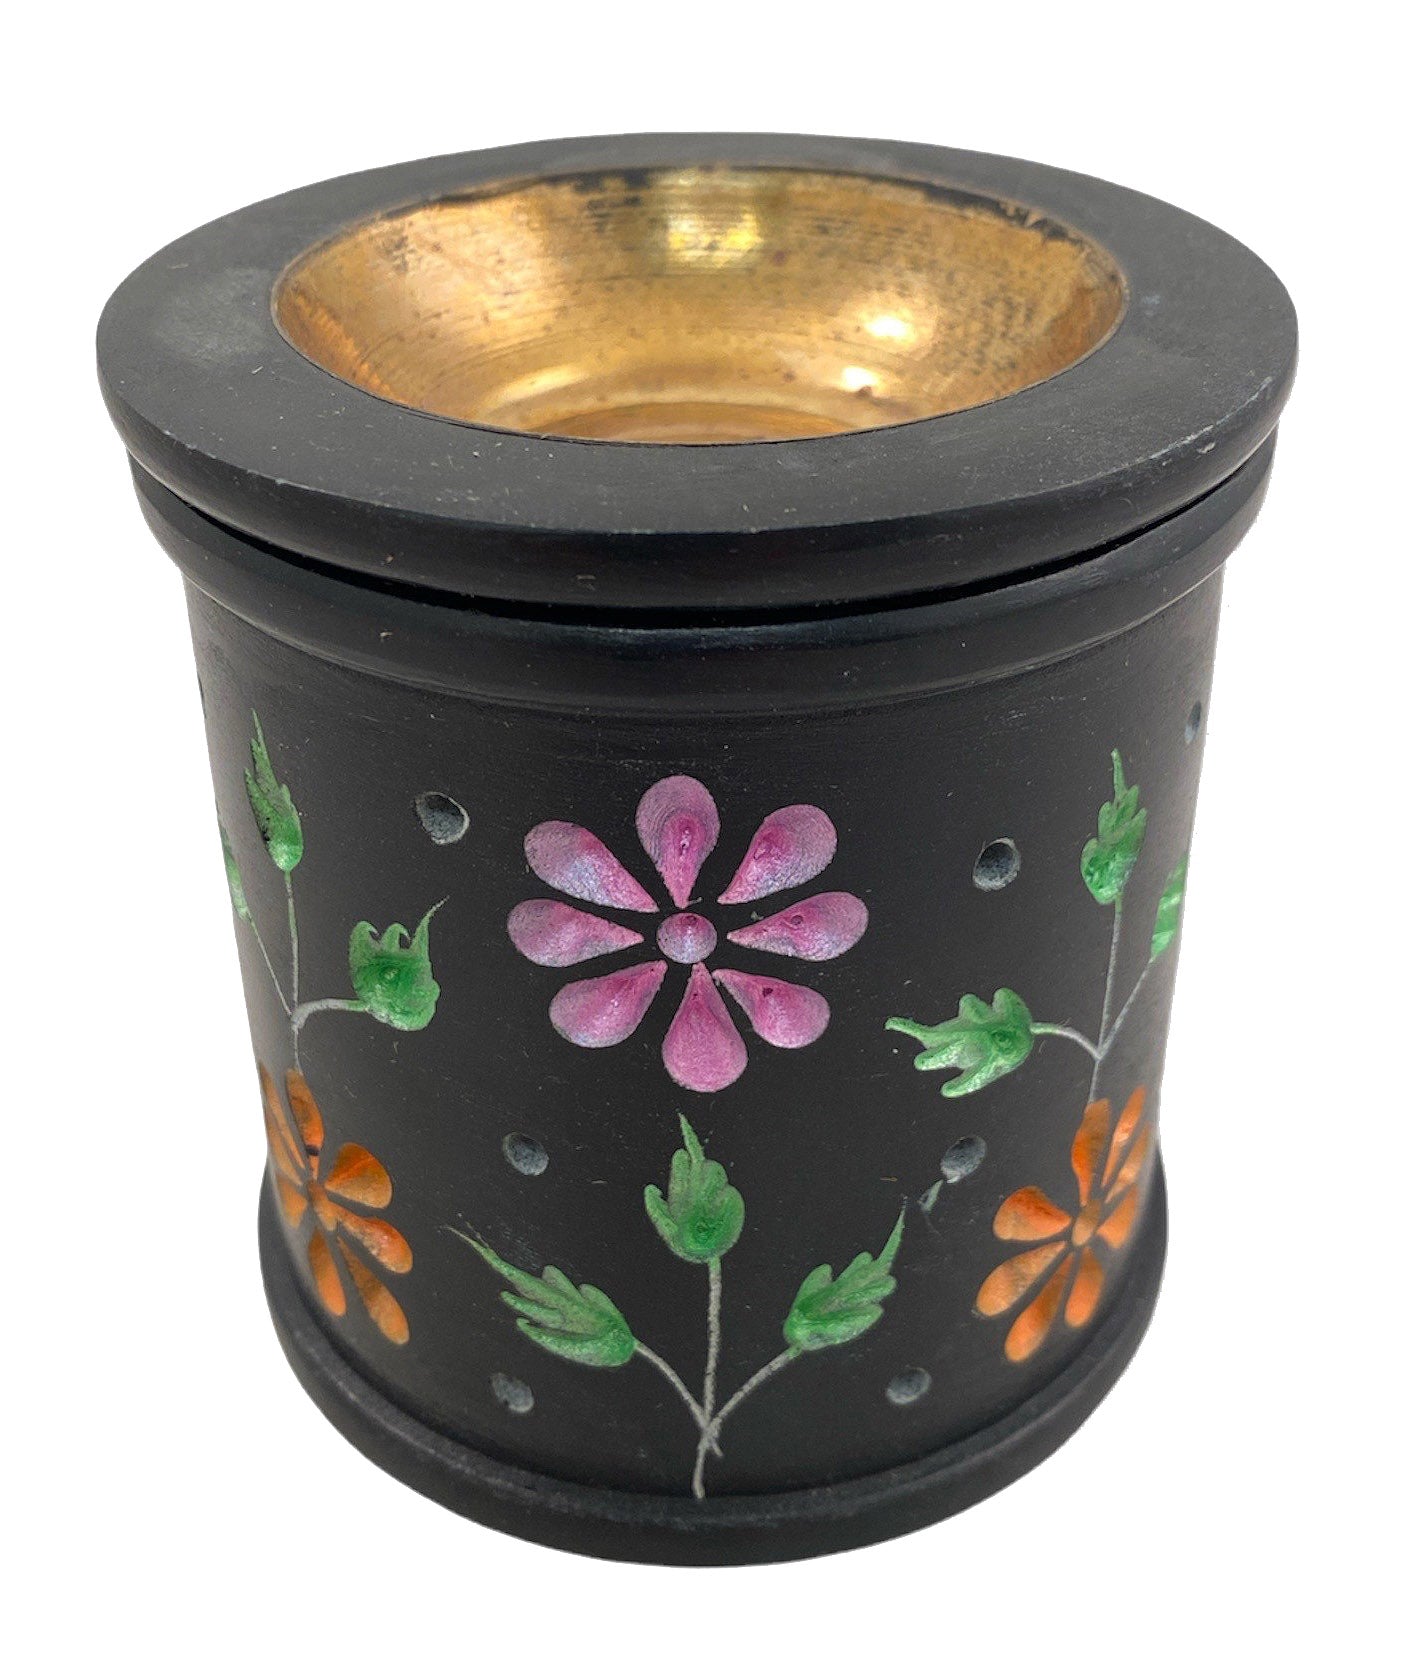 SOAP STONE Aroma Lamp - Resin & Oil Burner - 3 inch - Black with Color & Copper - NEW222